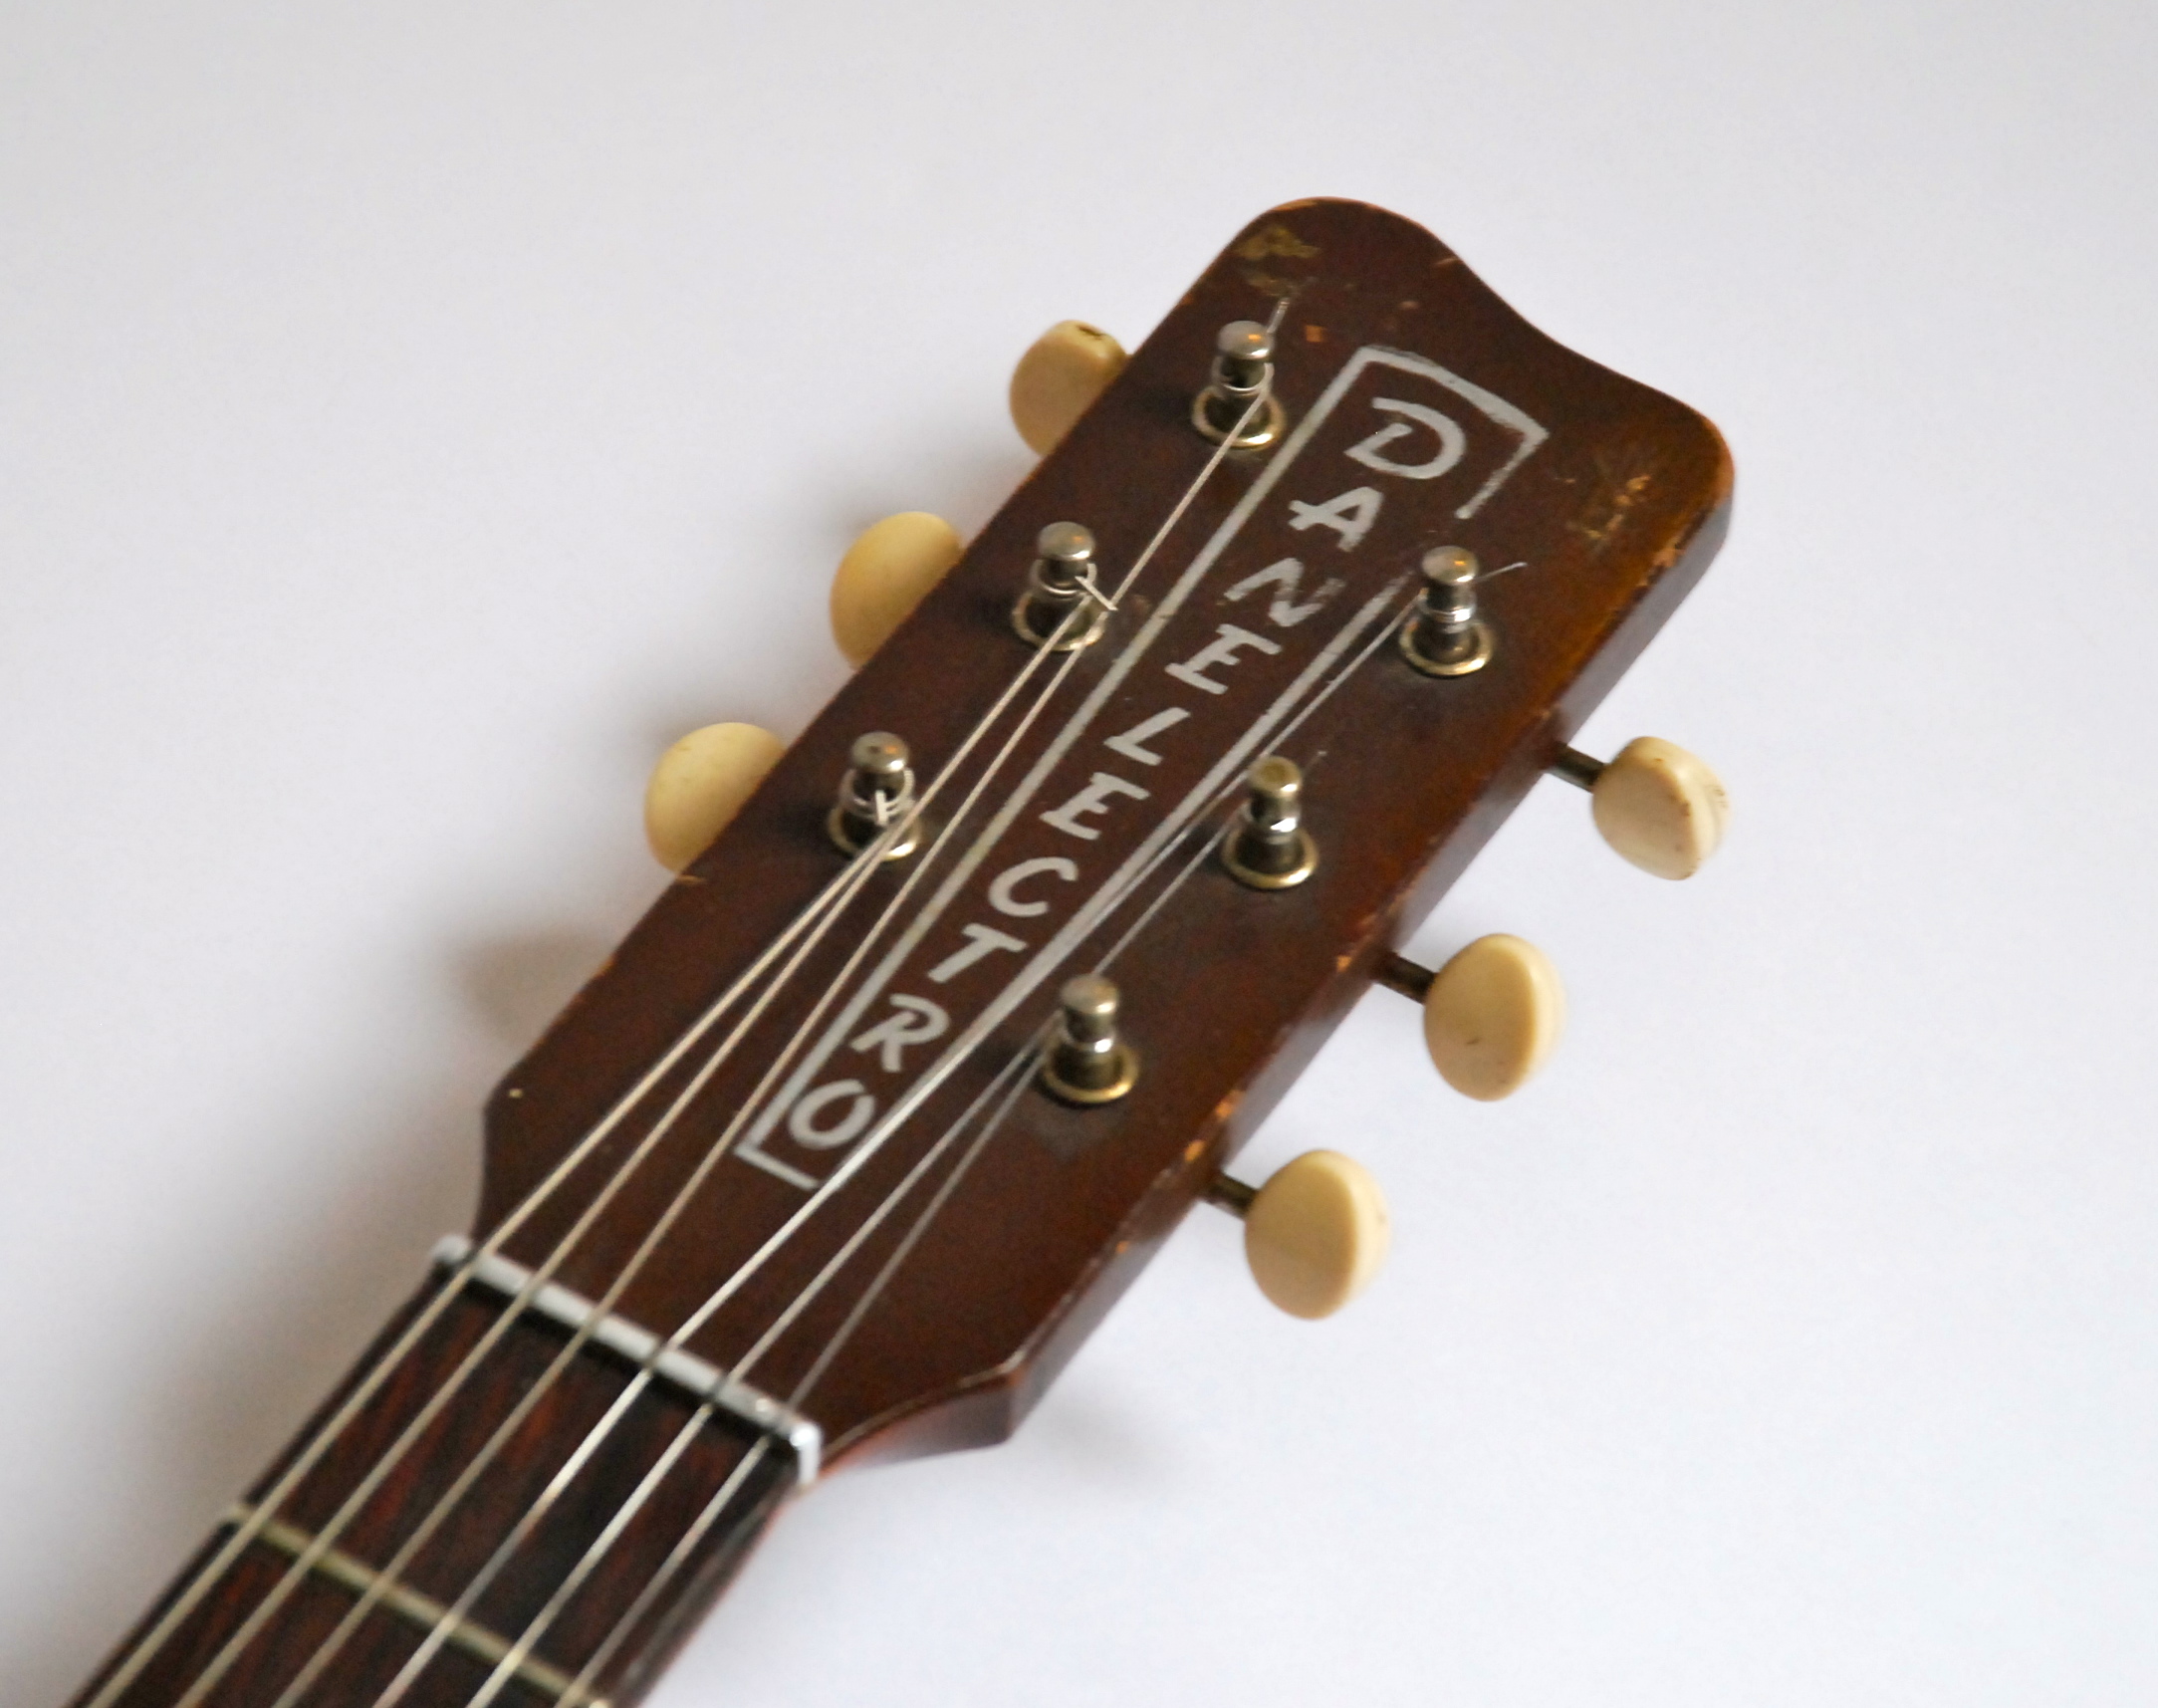 Danelectro Dano Pro 1 1963 Sparkle Brown Guitar For Sale Bass N Guitar